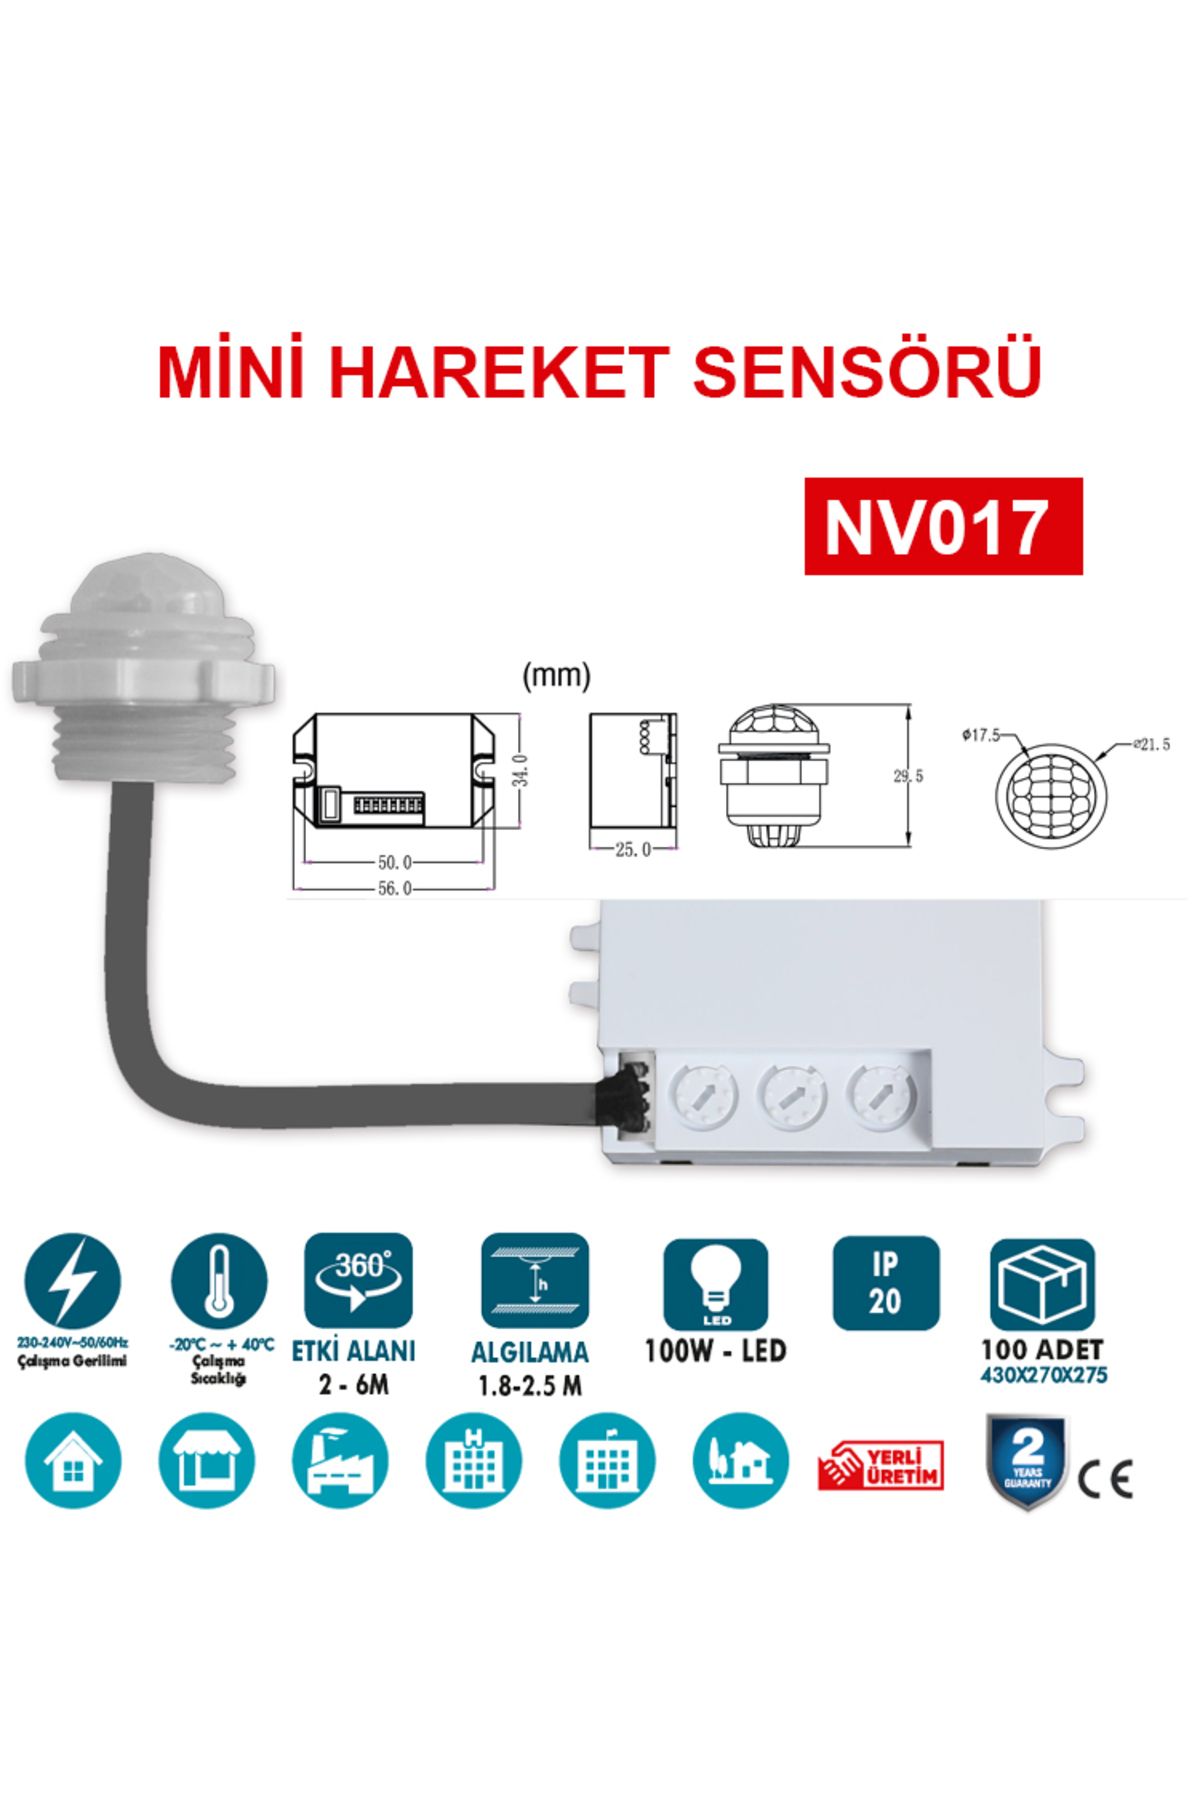 Novo Mini Hareket Sensörü (NV017)